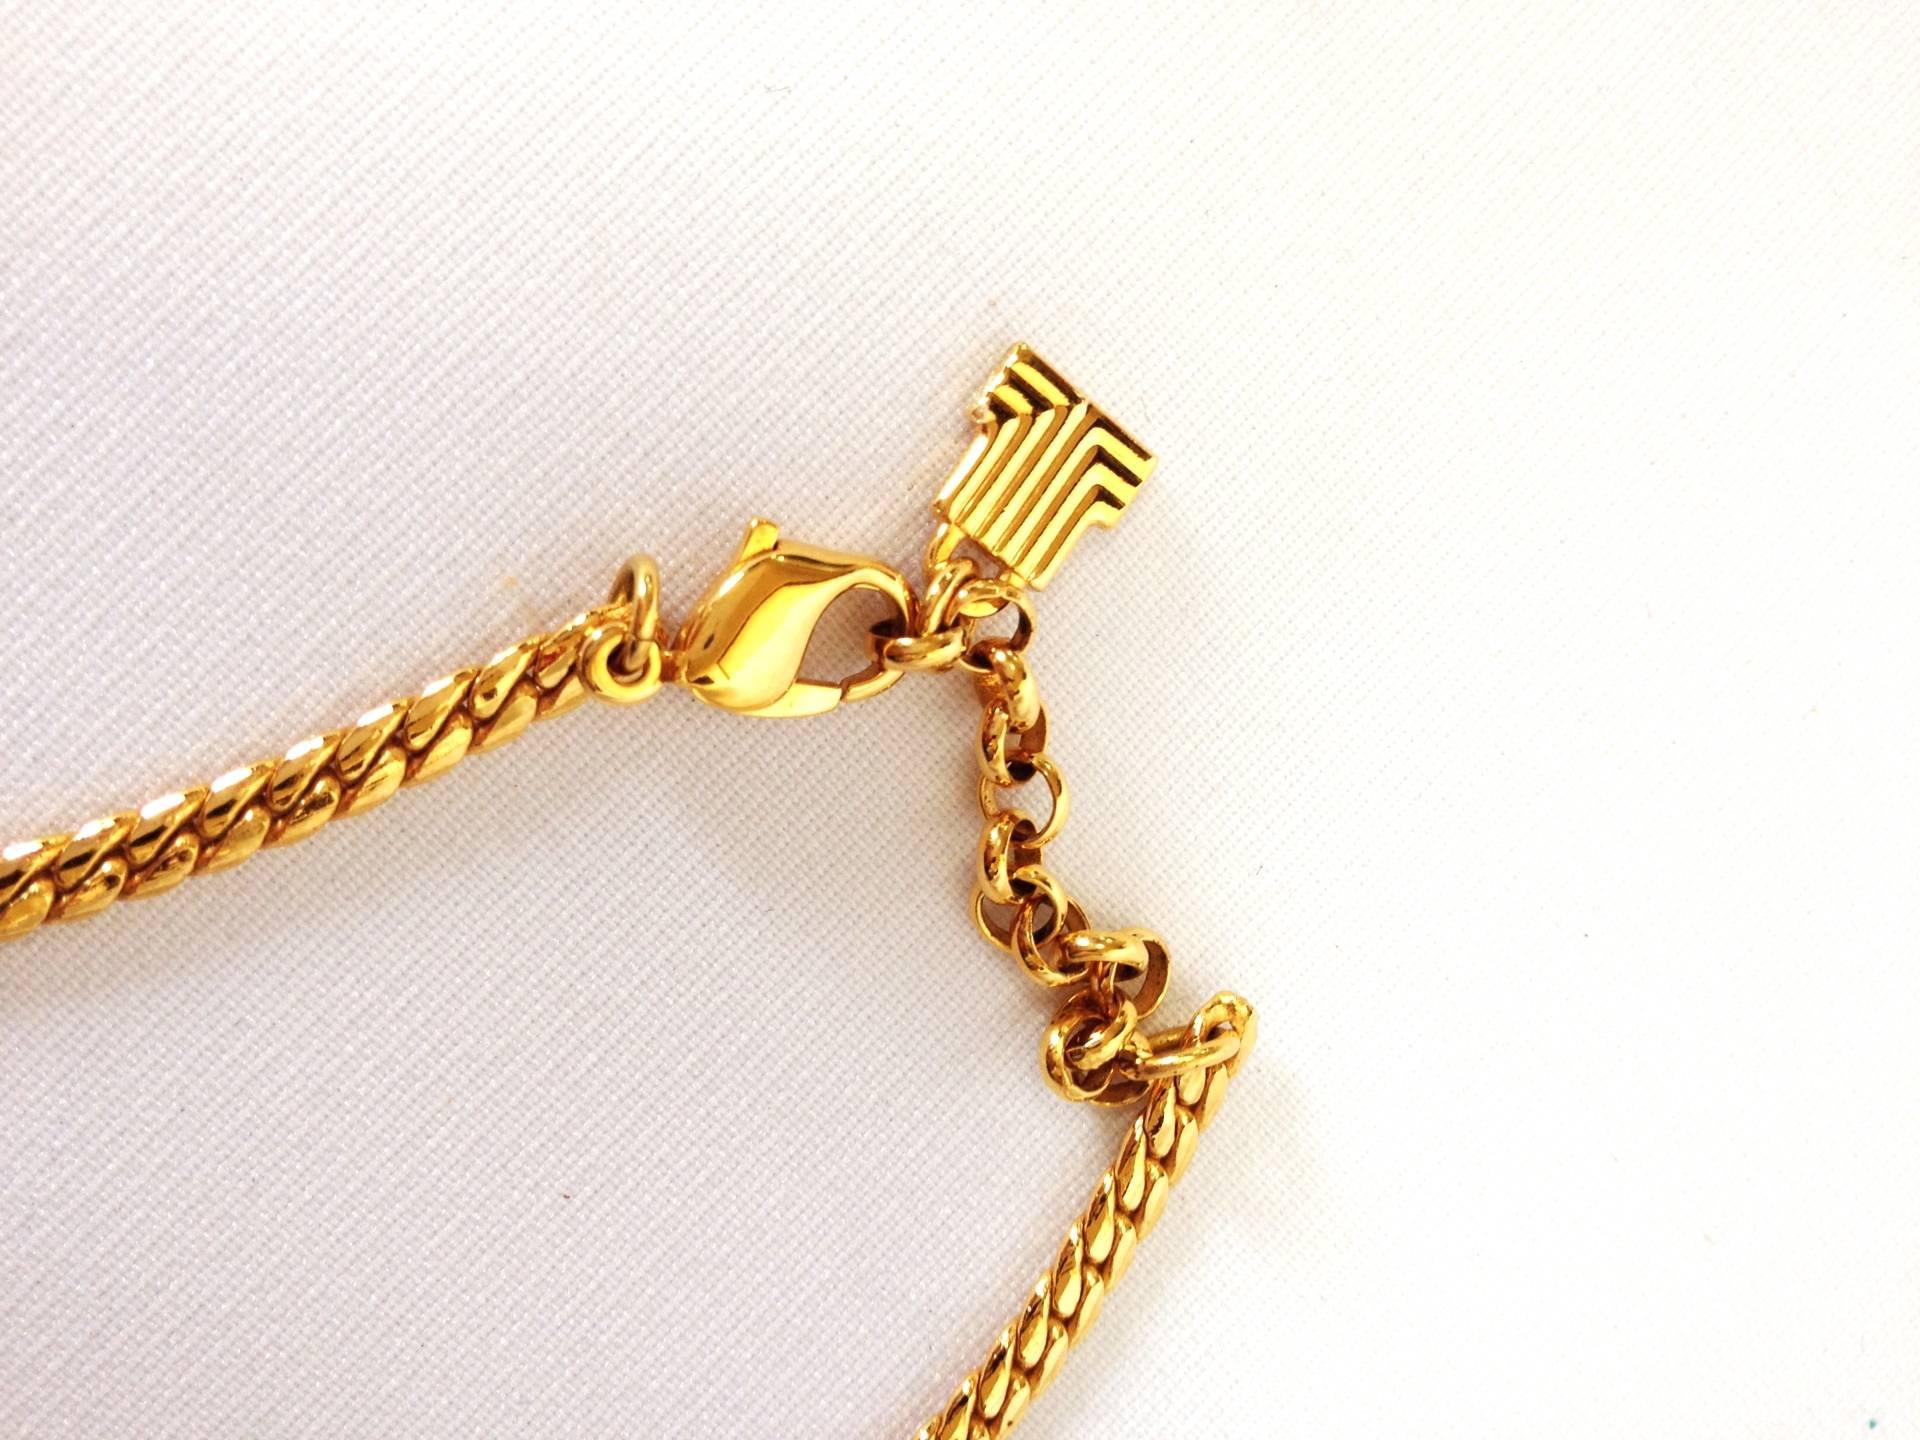 Vintage LANVIN golden chain skinny necklace with golden leaf motif pendant top For Sale 1